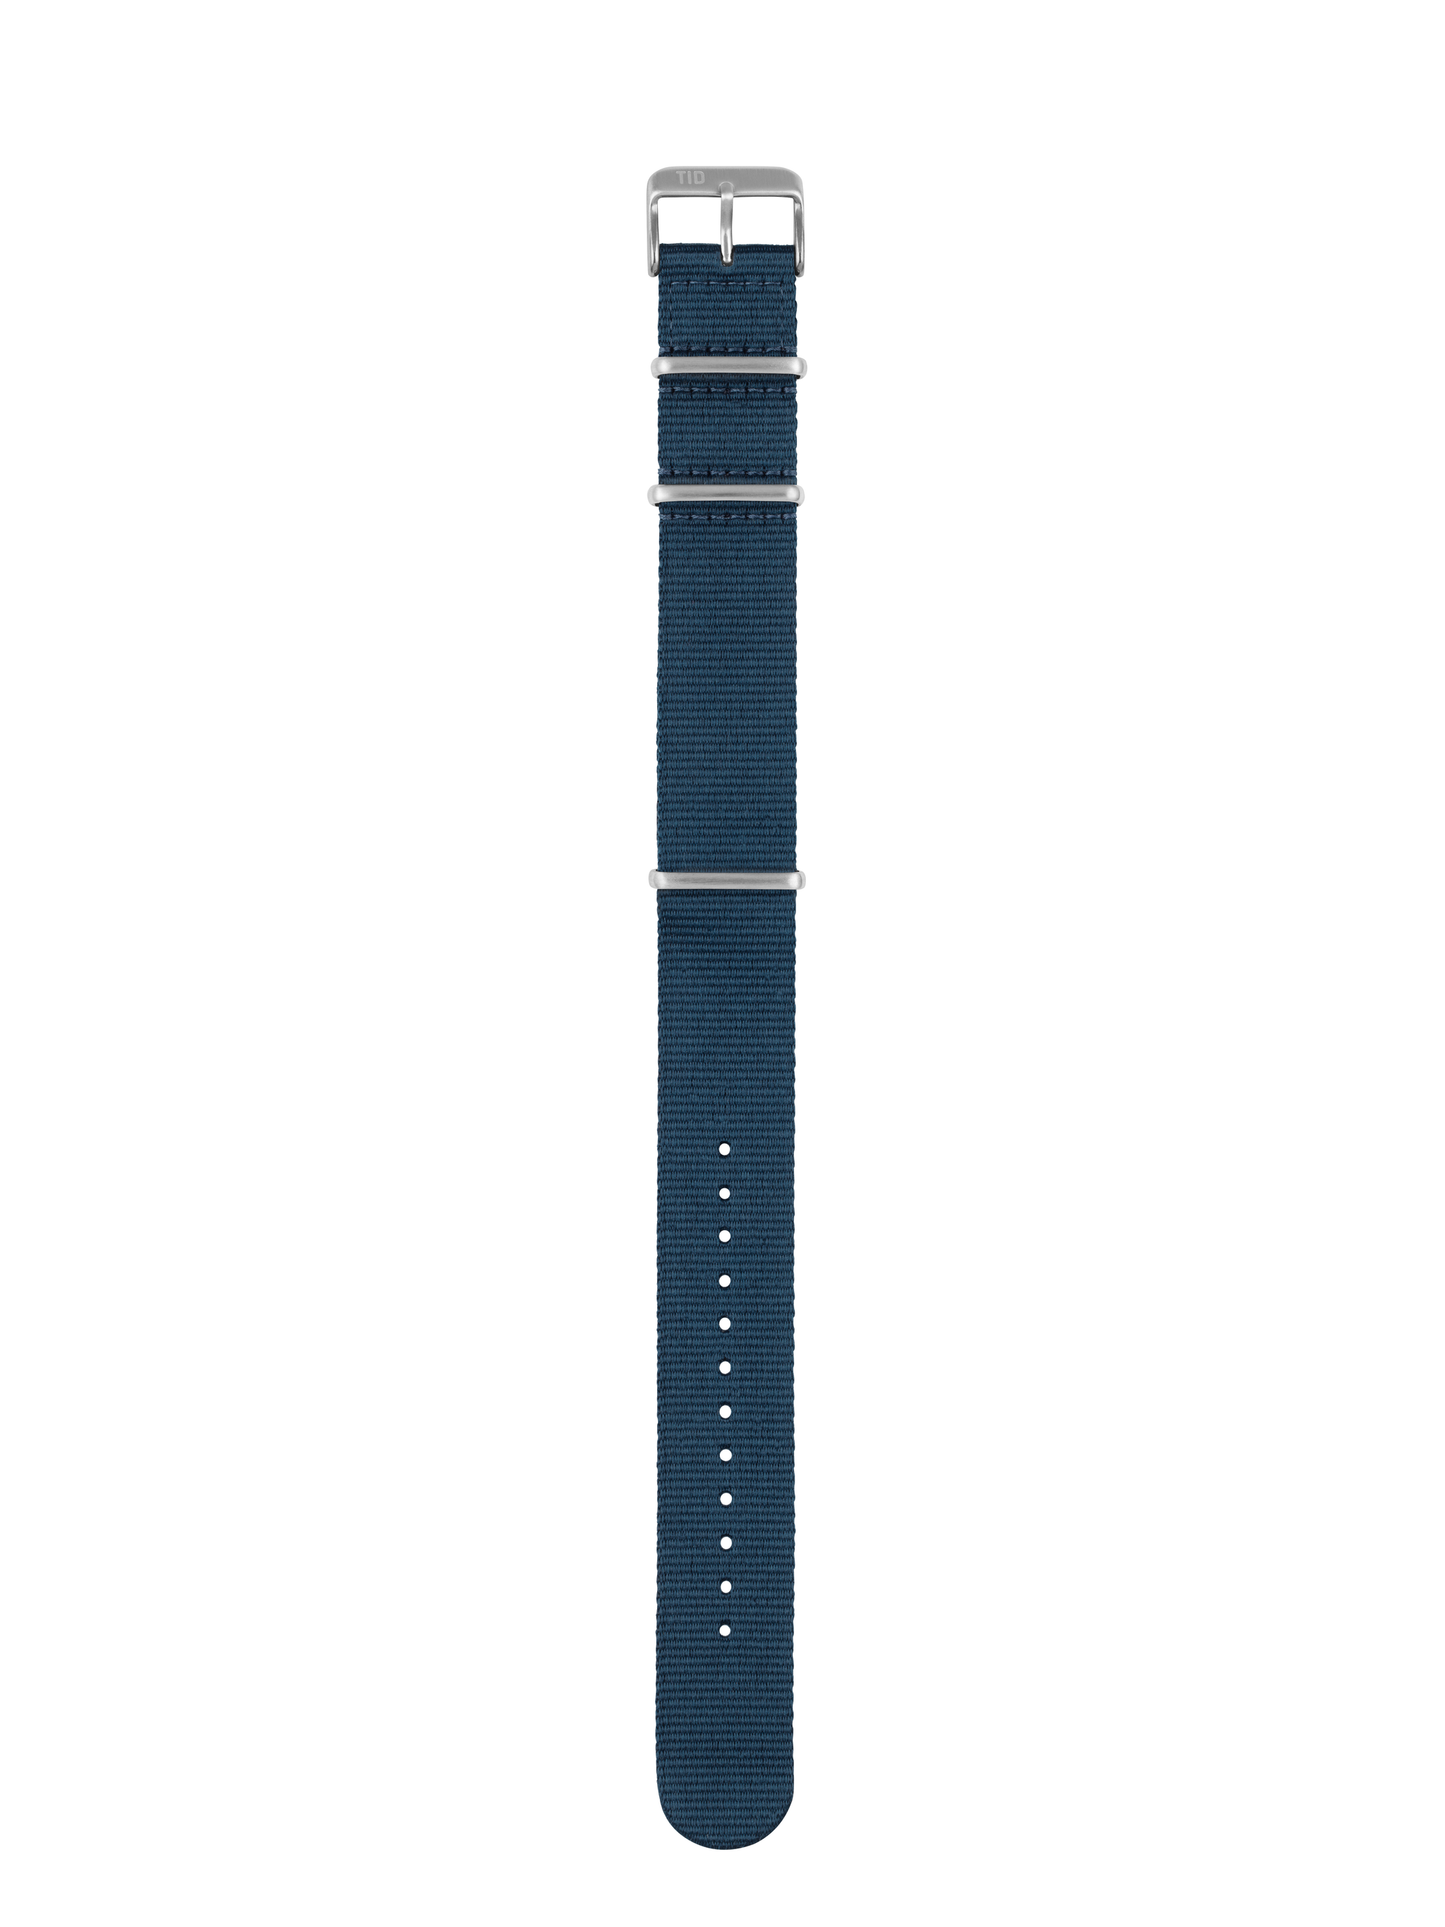 Blue Nylon Wristband / Steel buckle